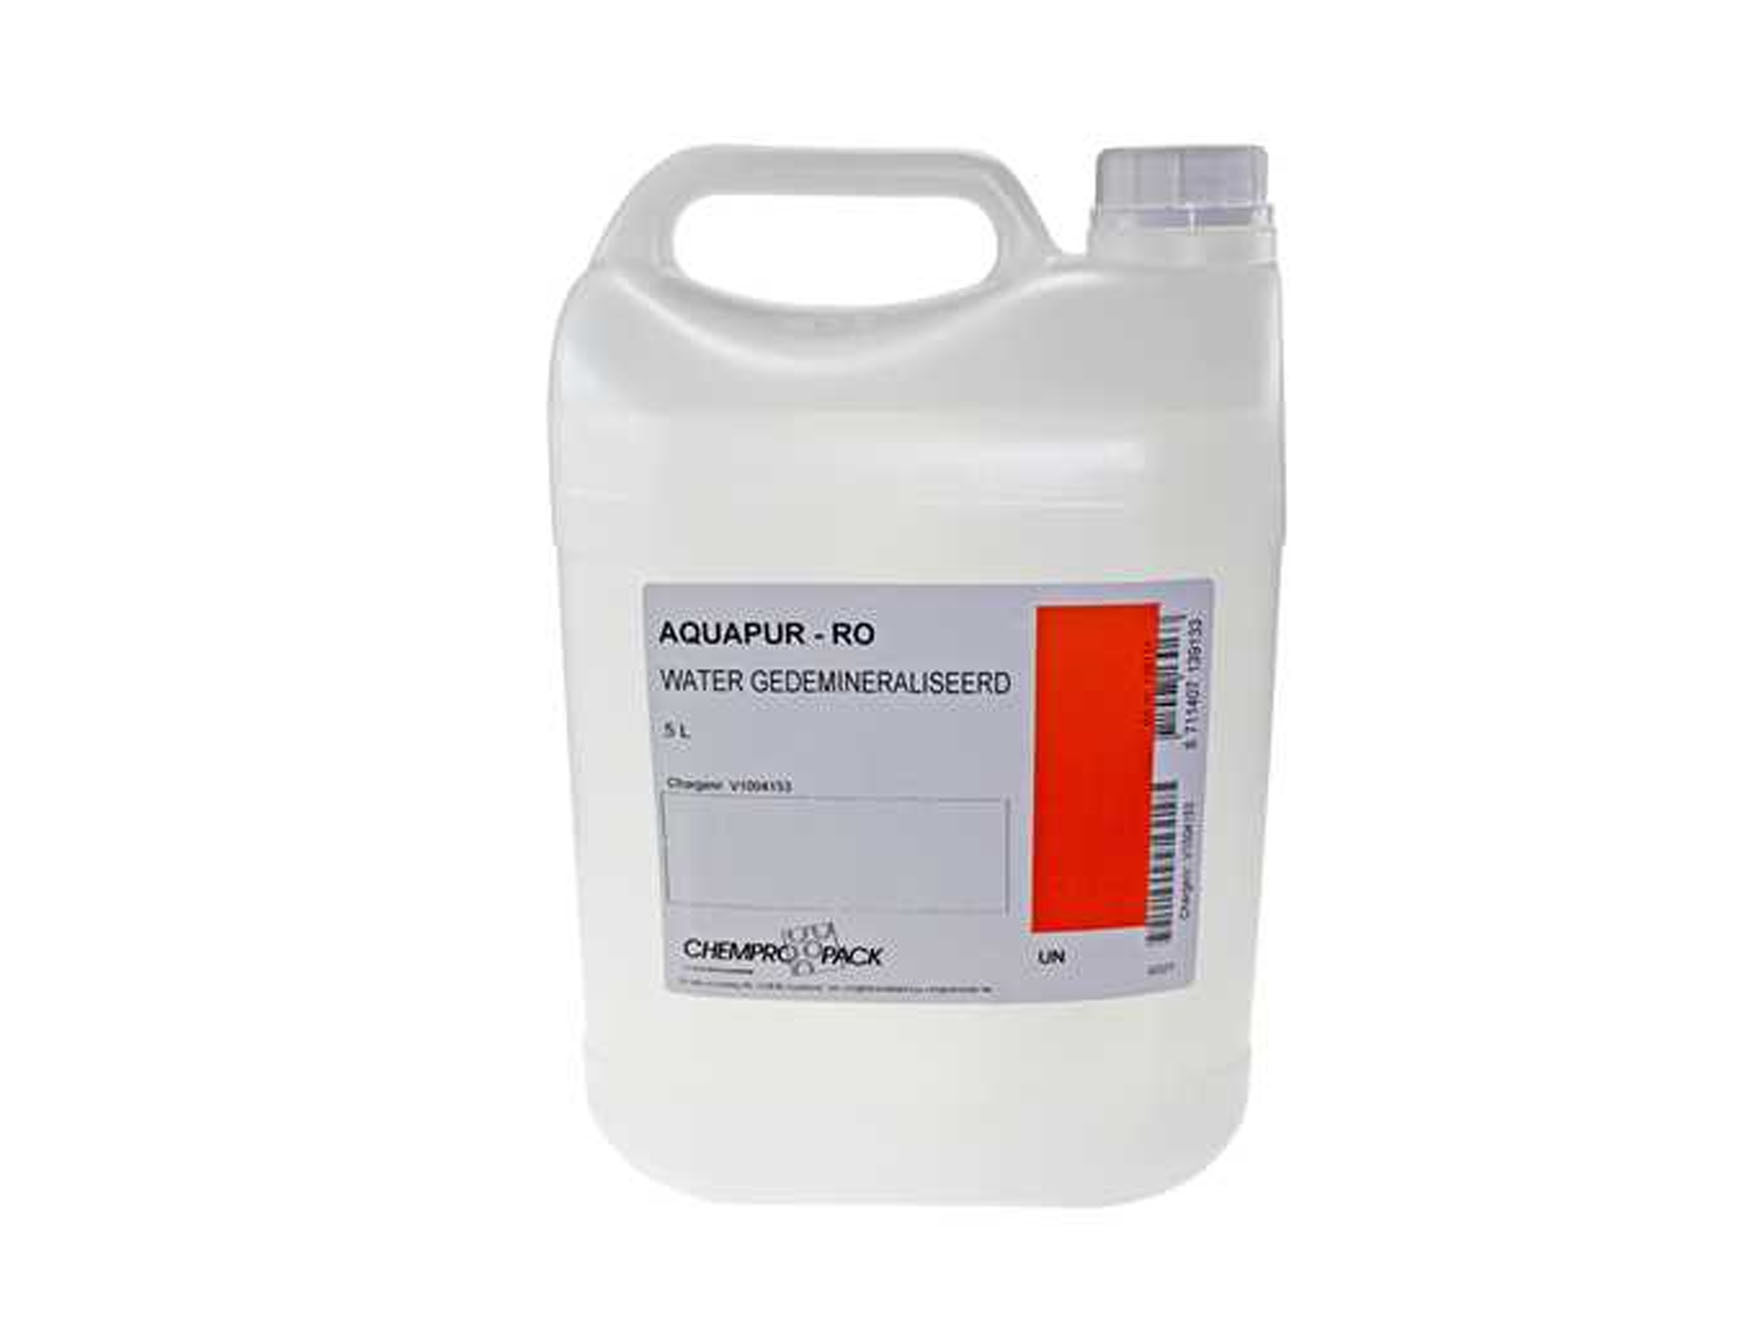 Aqua purificata - Gedemineraliseerd water - 5 liter - 1 st